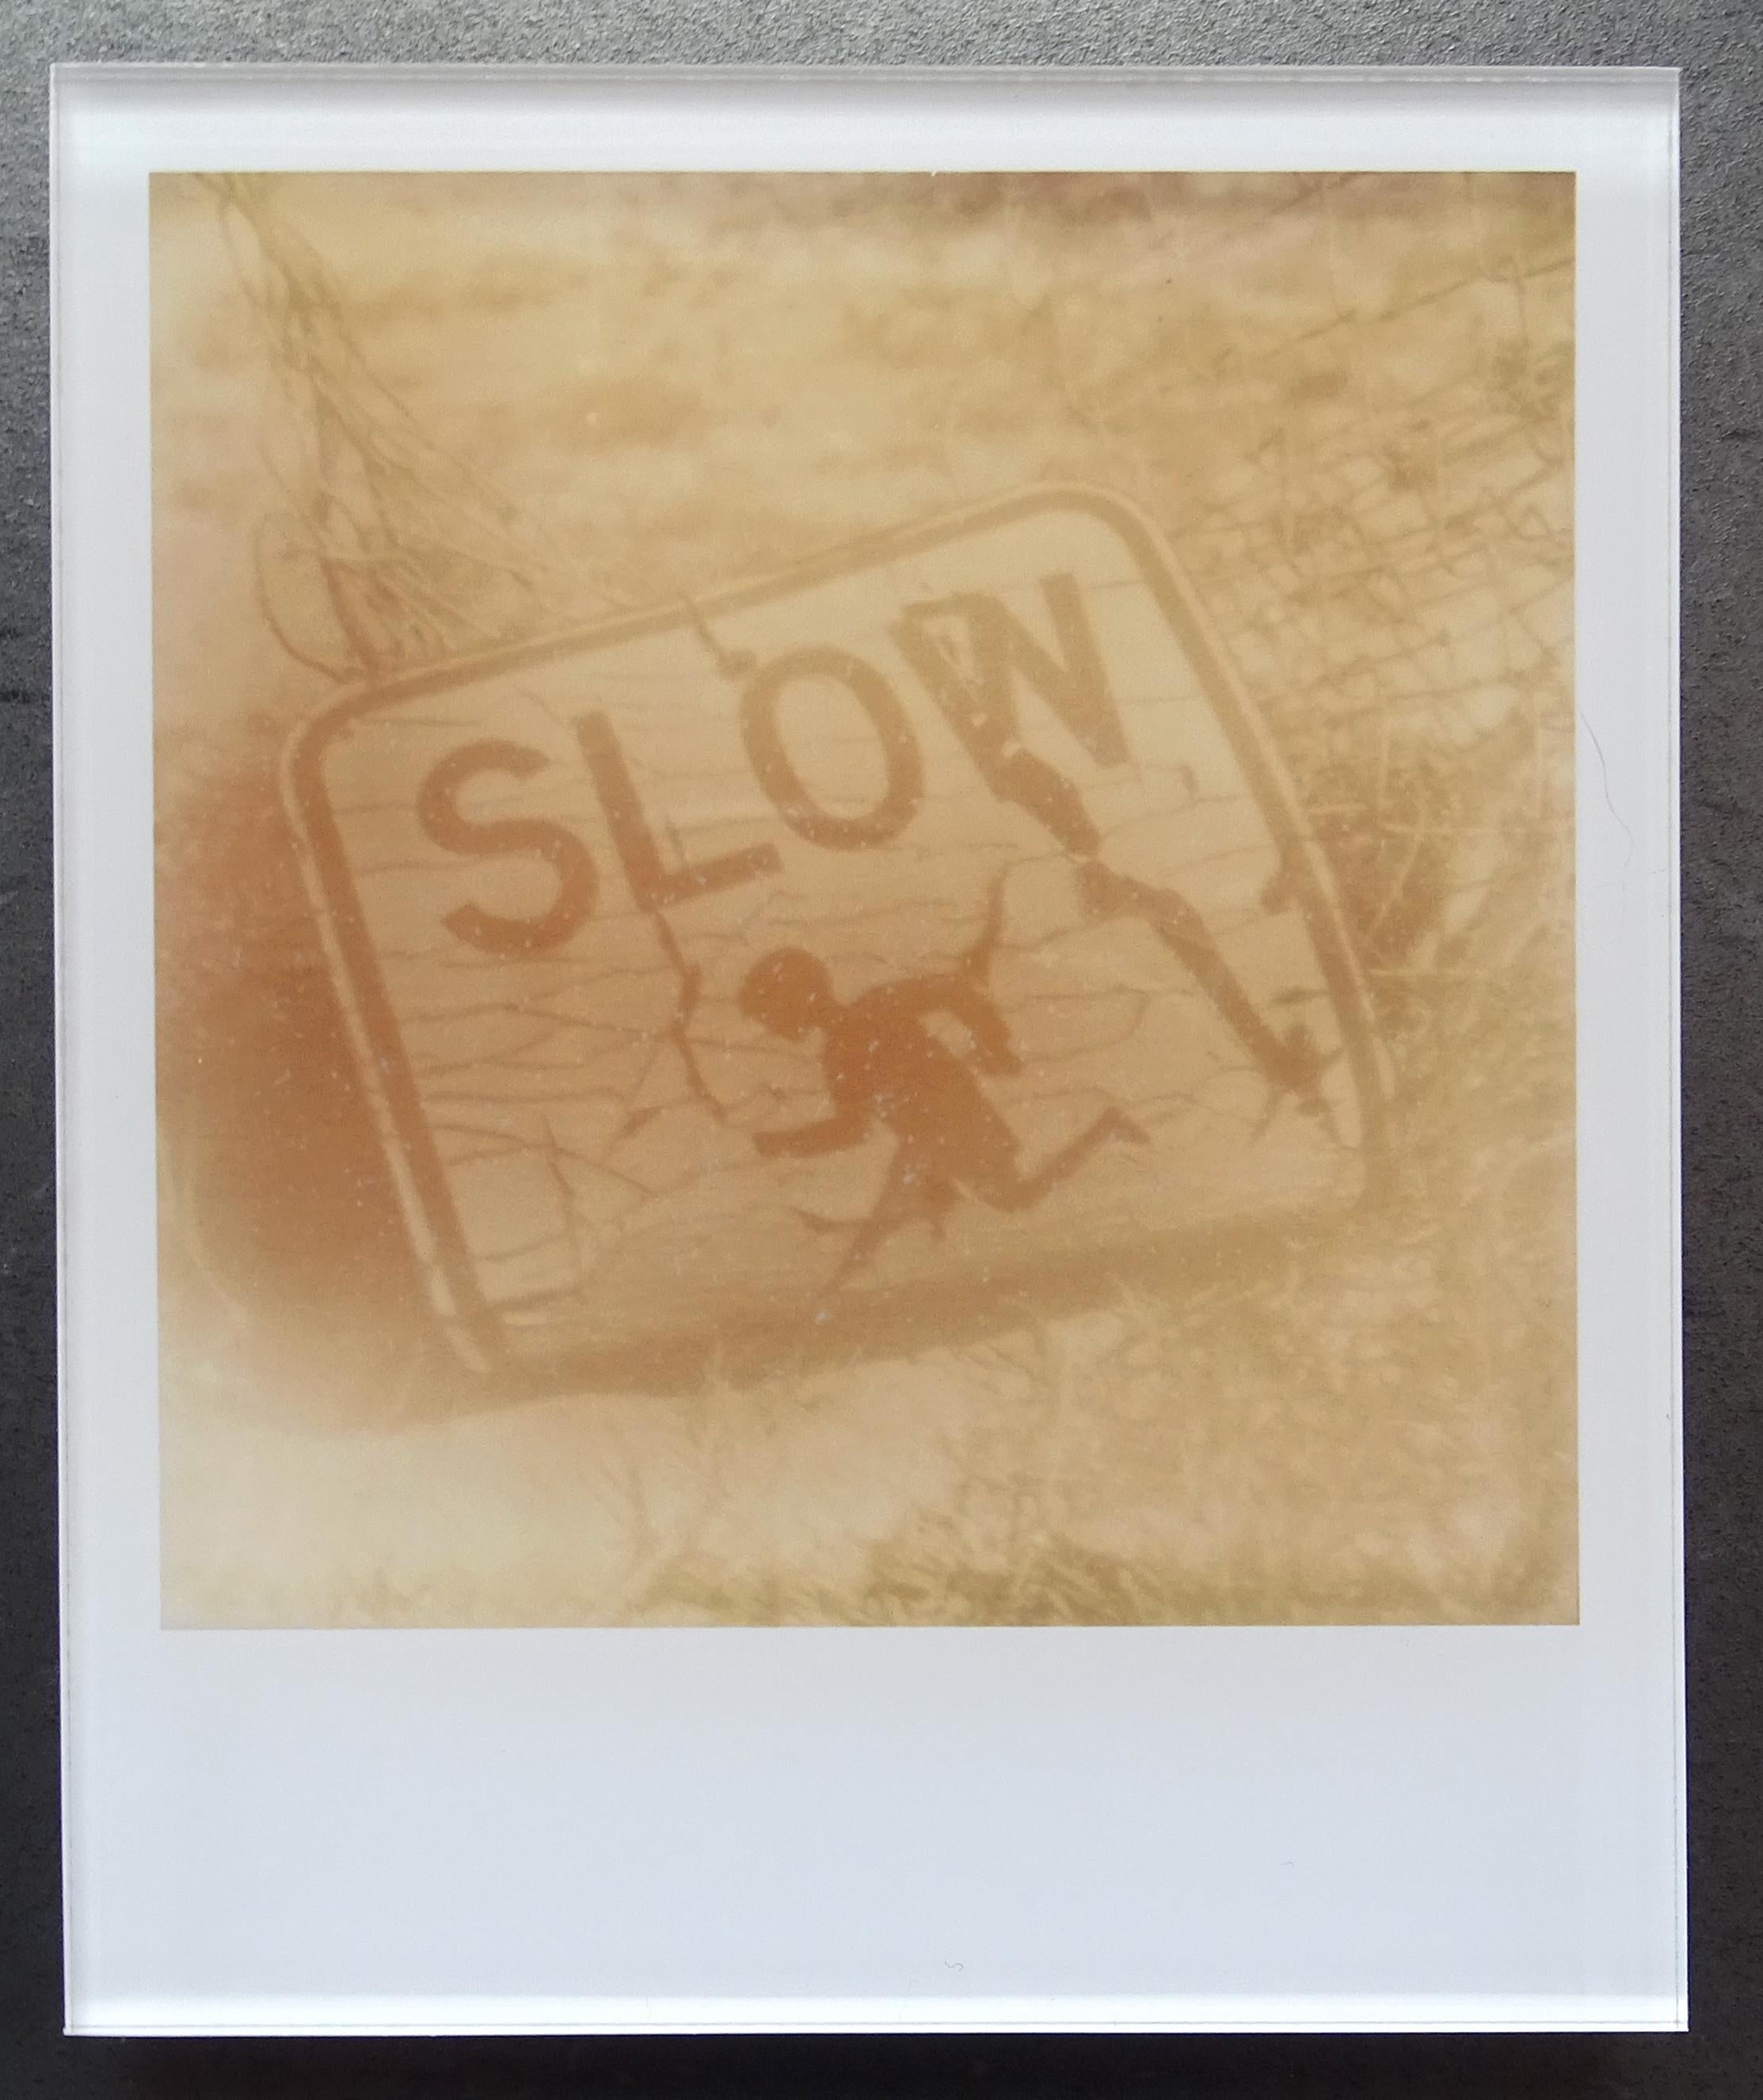 Stefanie Schneider Minis - Slow - based on a Polaroid, mounted